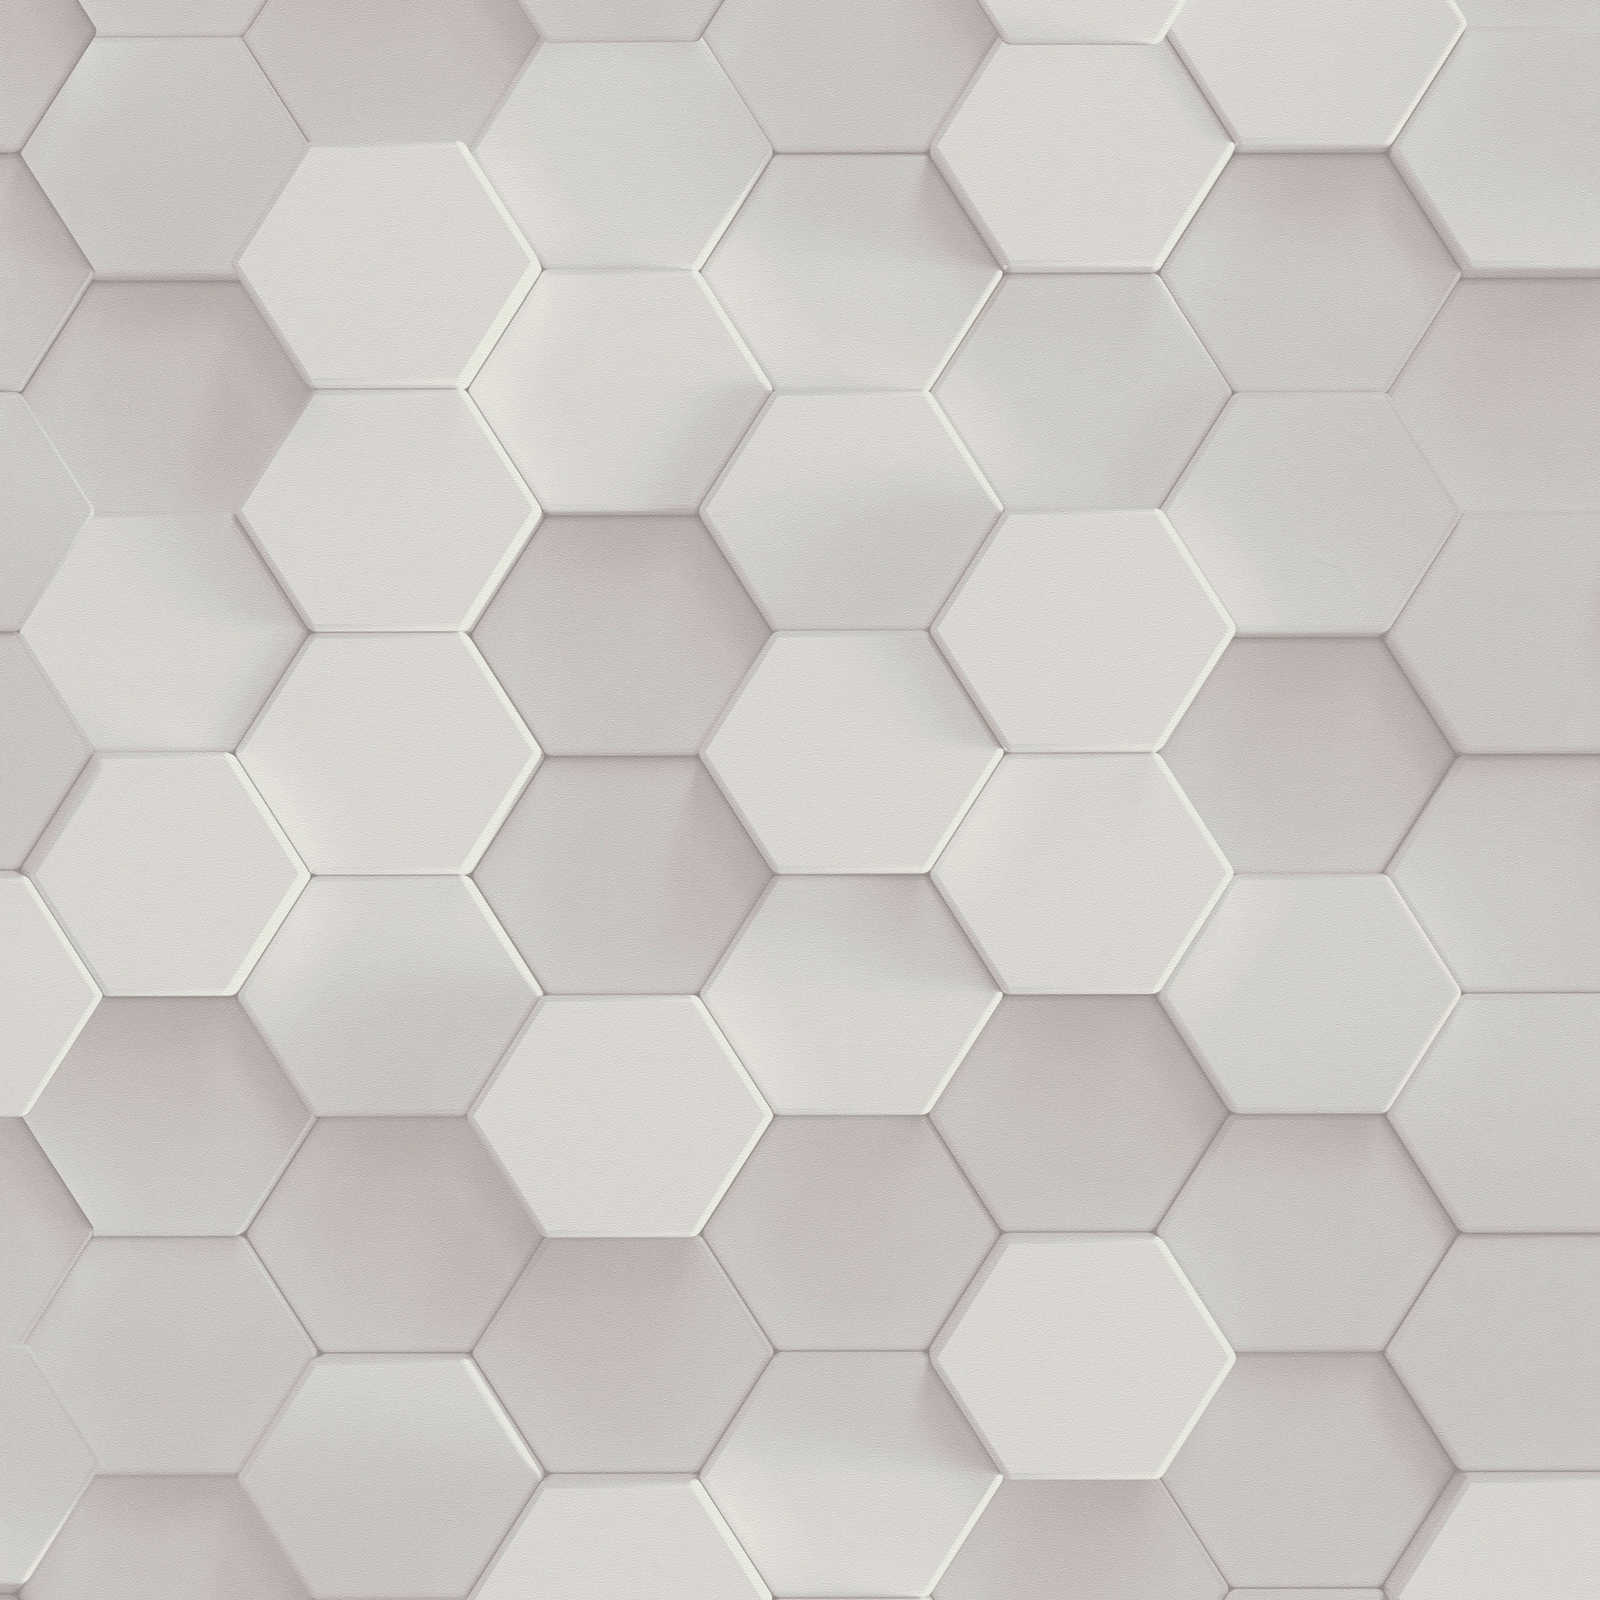         Hexagon 3D wallpaper graphic pattern honeycomb - white
    